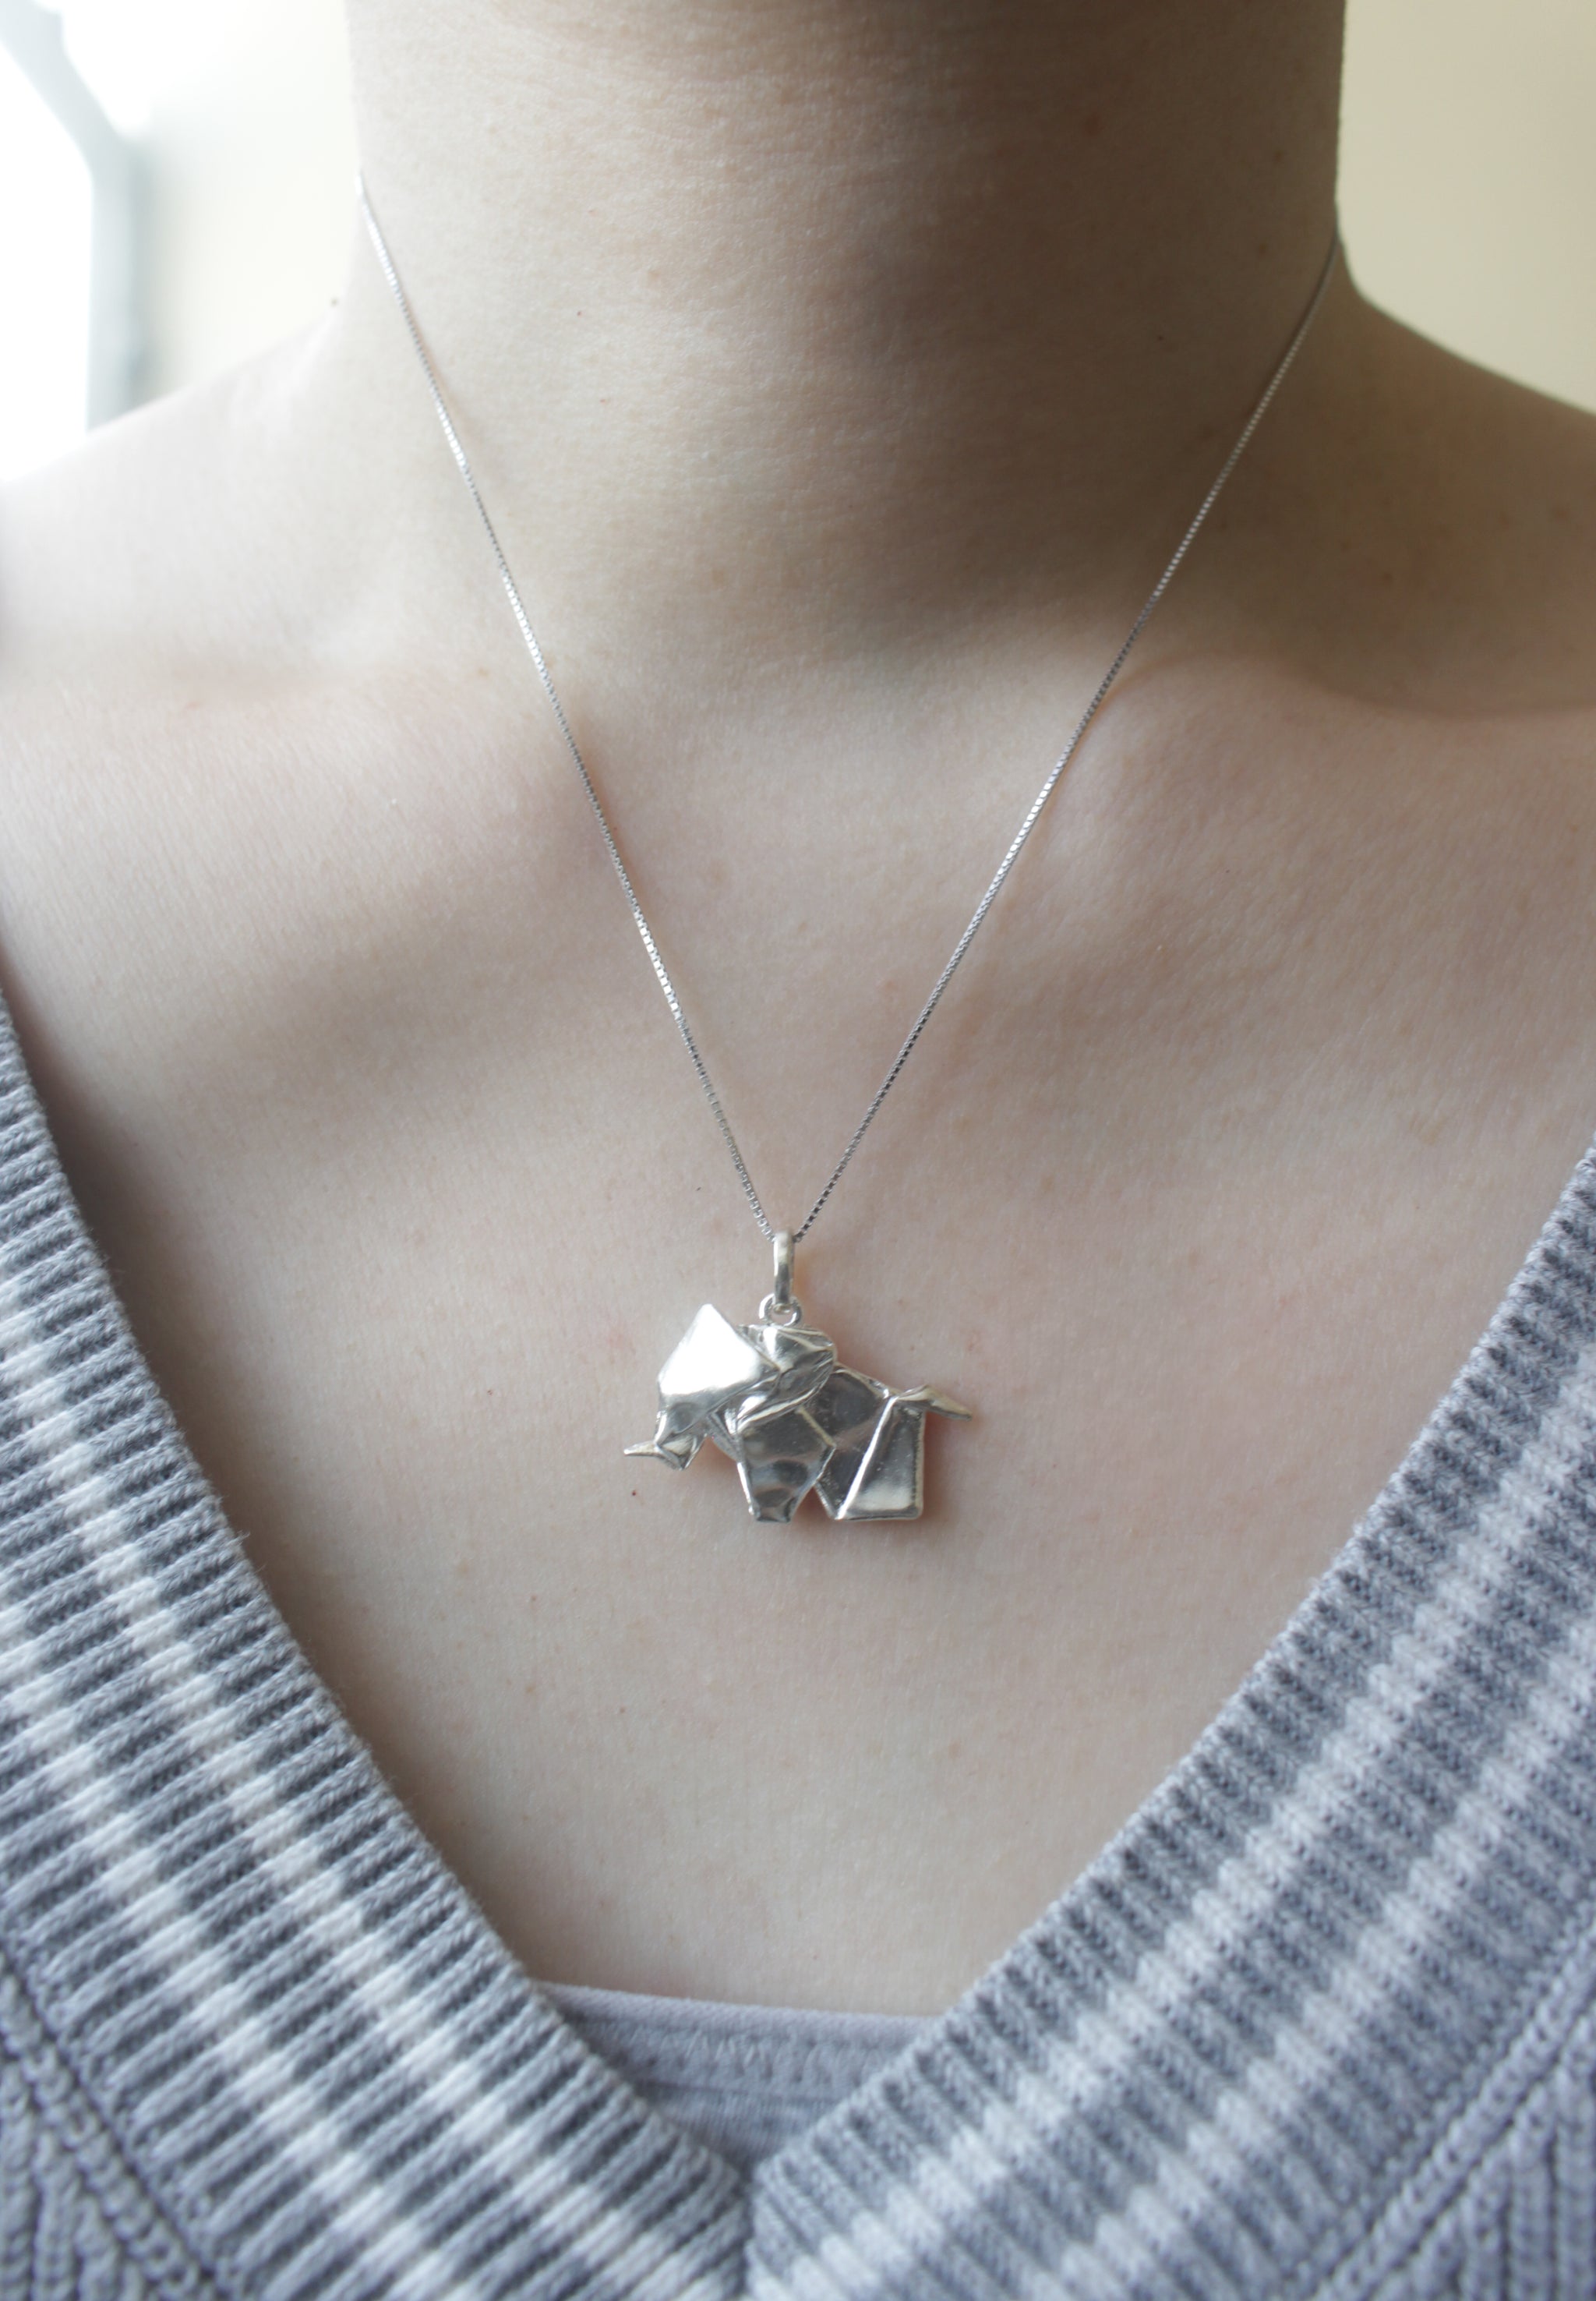 Silver Origami Big Elephant Necklace